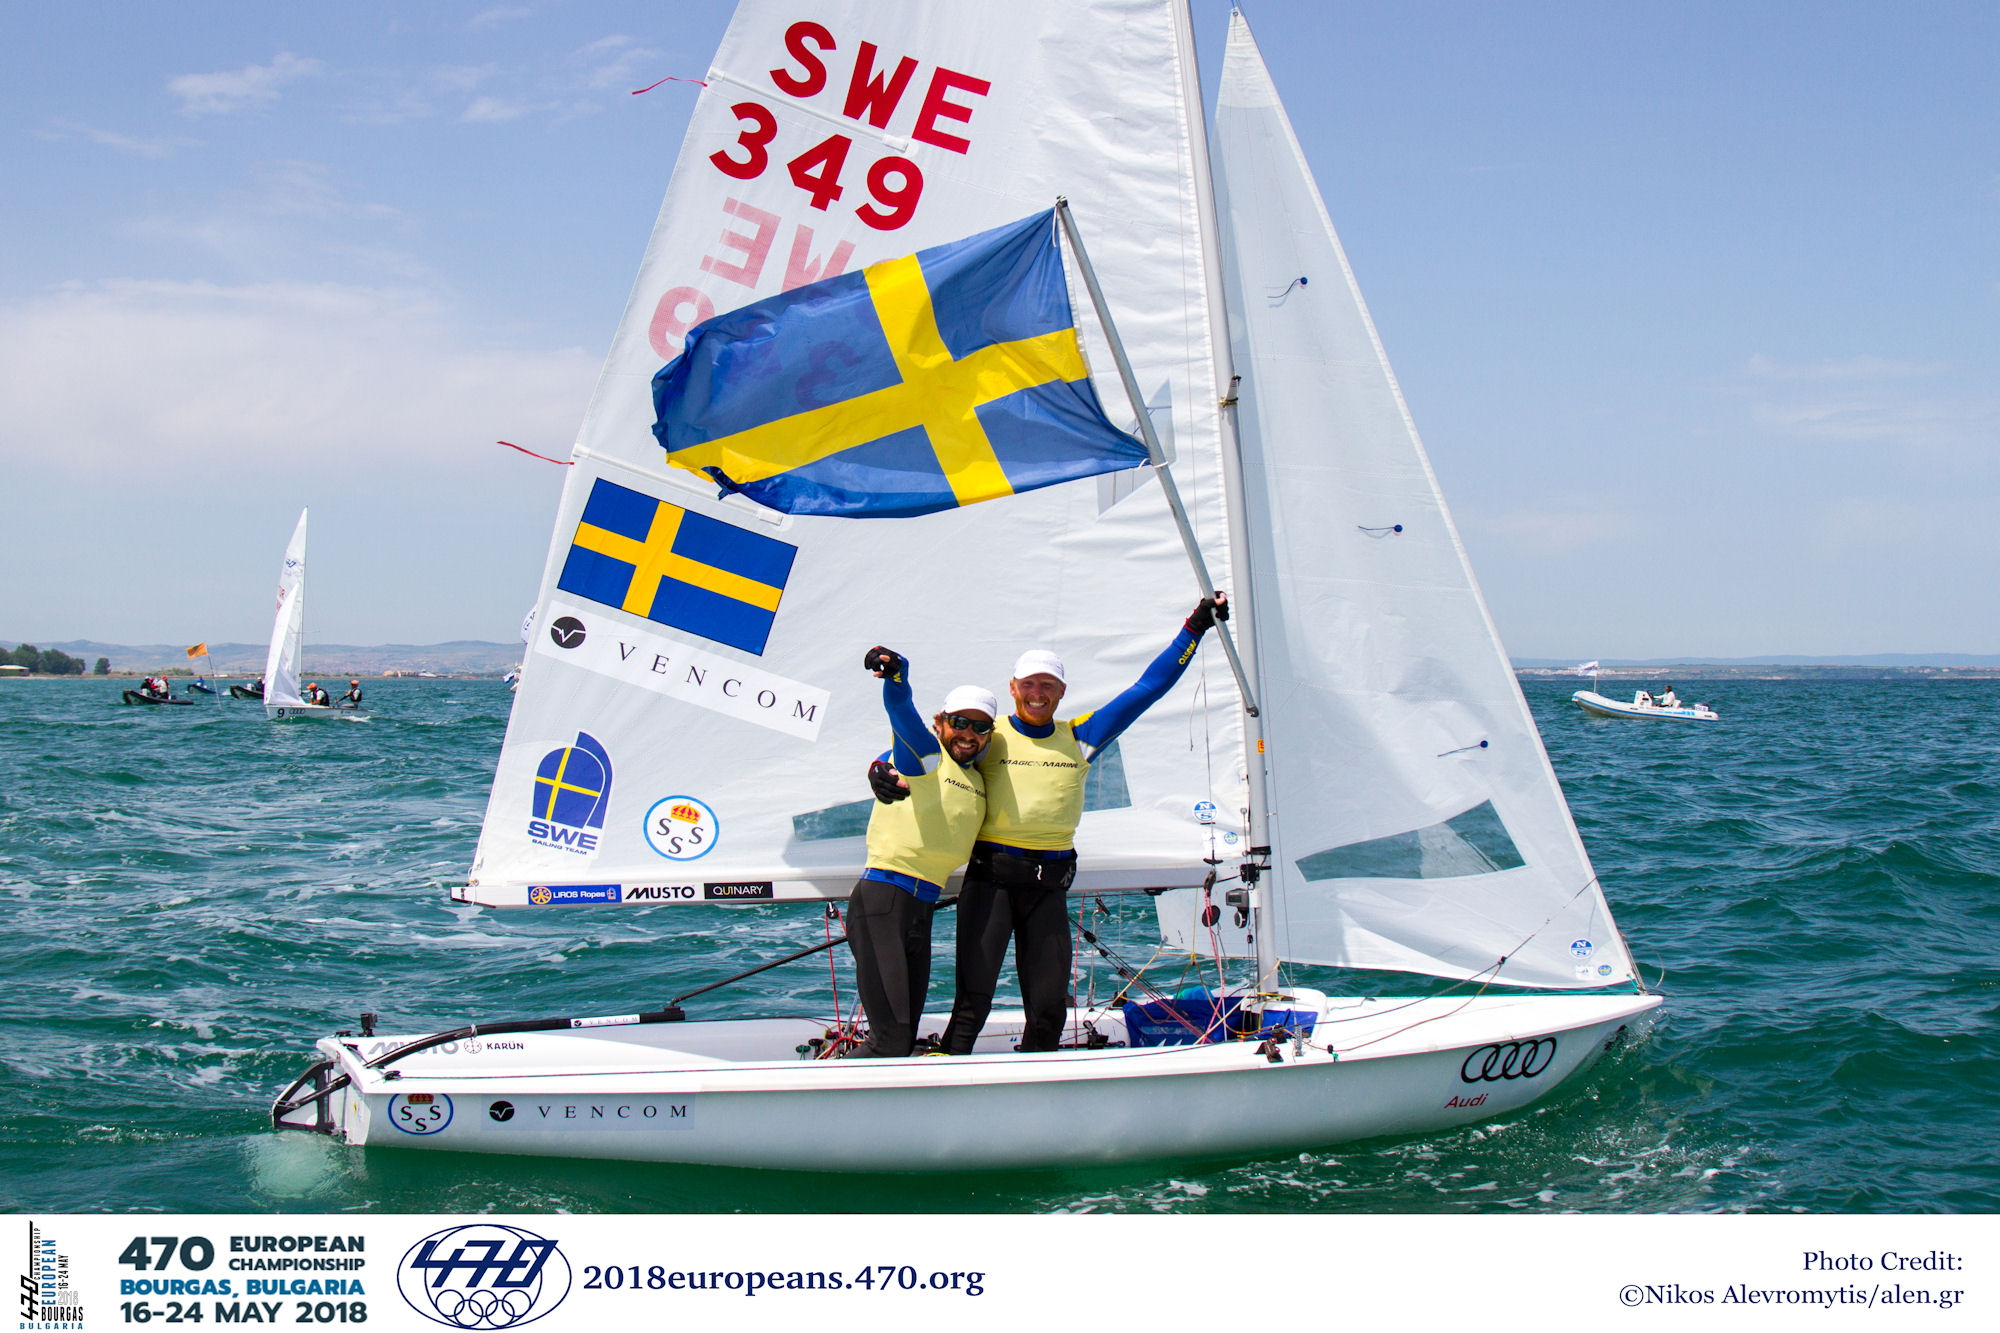 Anton Dahlberg/Fredrik Bergstrom (SWE) win gold